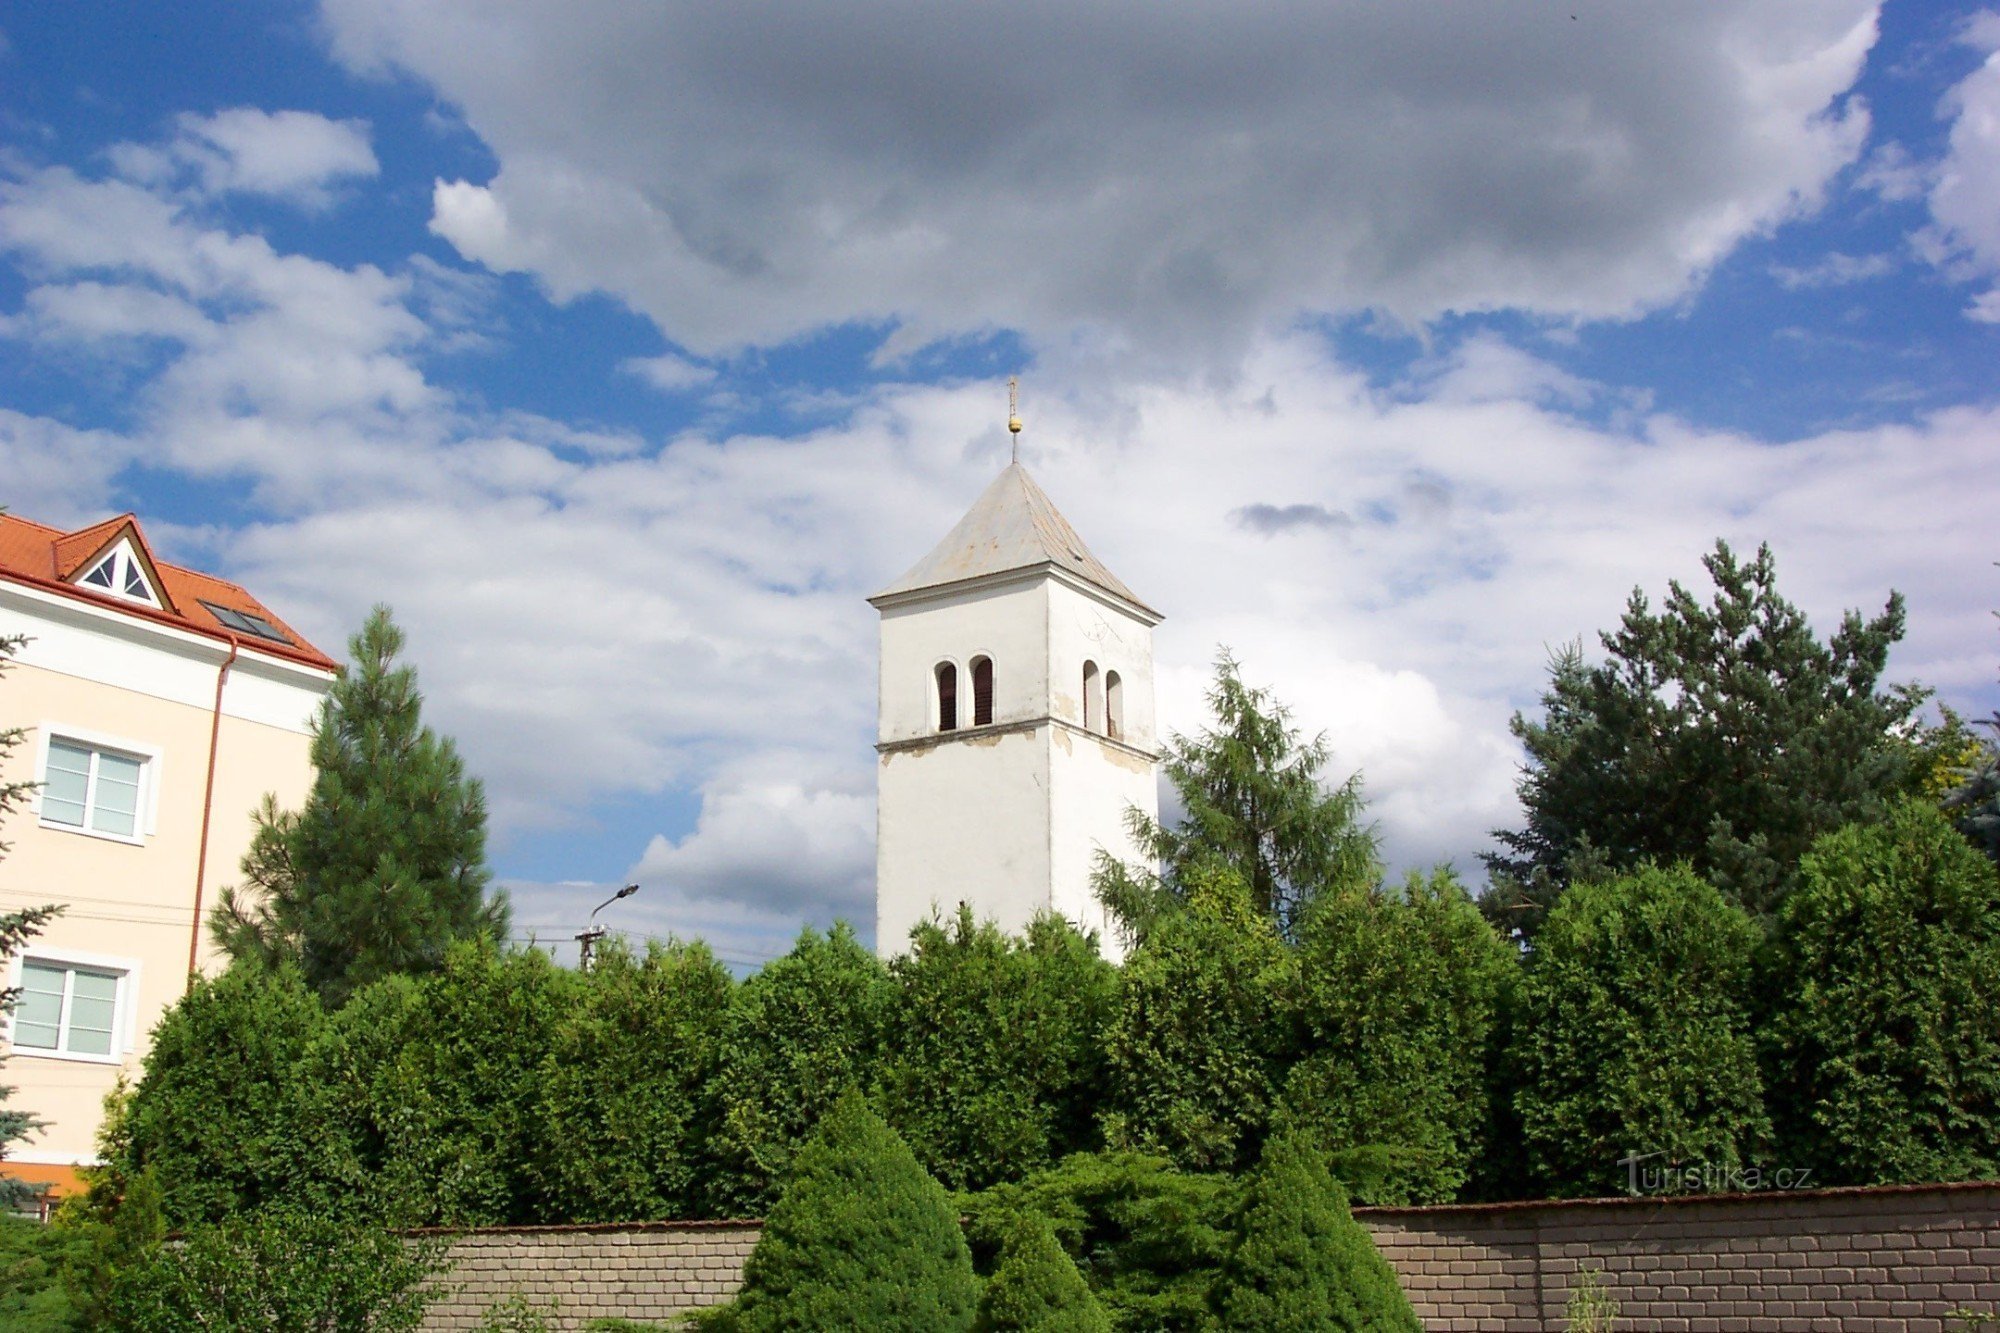 Tháp chuông Drevohostice